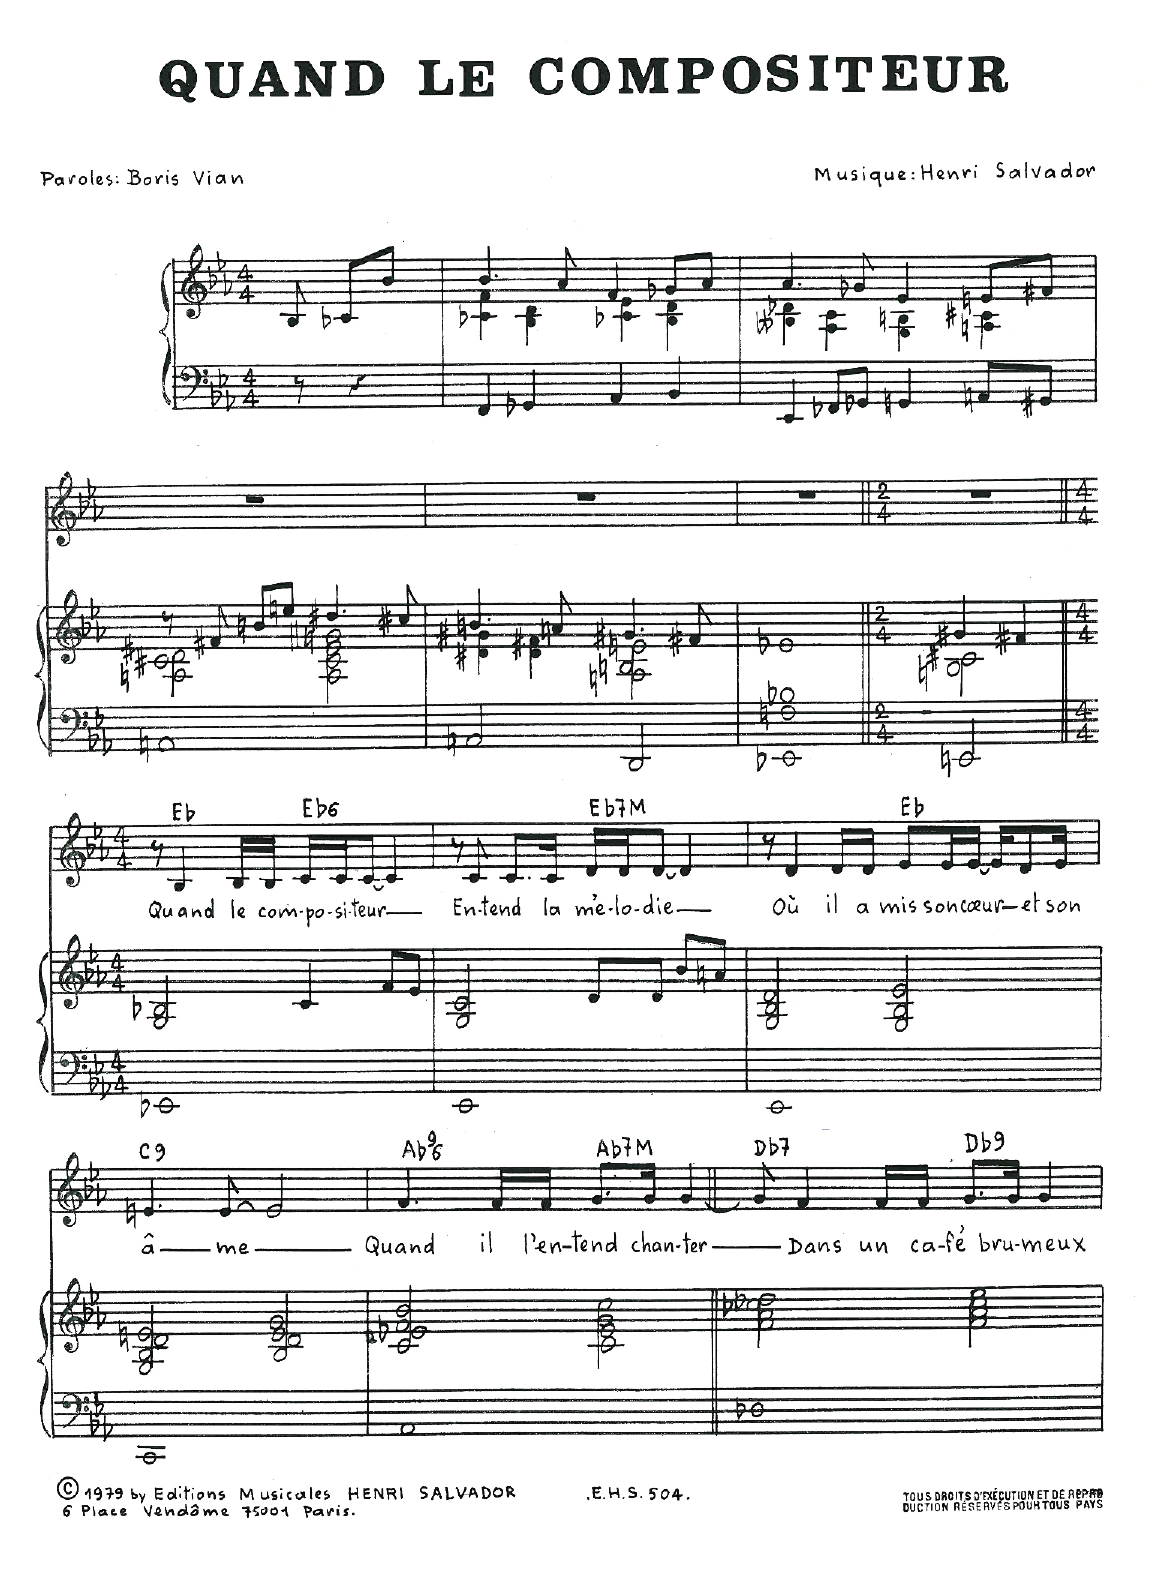 Henri Salvador Quand Le Compositeur Sheet Music Notes & Chords for Piano, Vocal & Guitar - Download or Print PDF